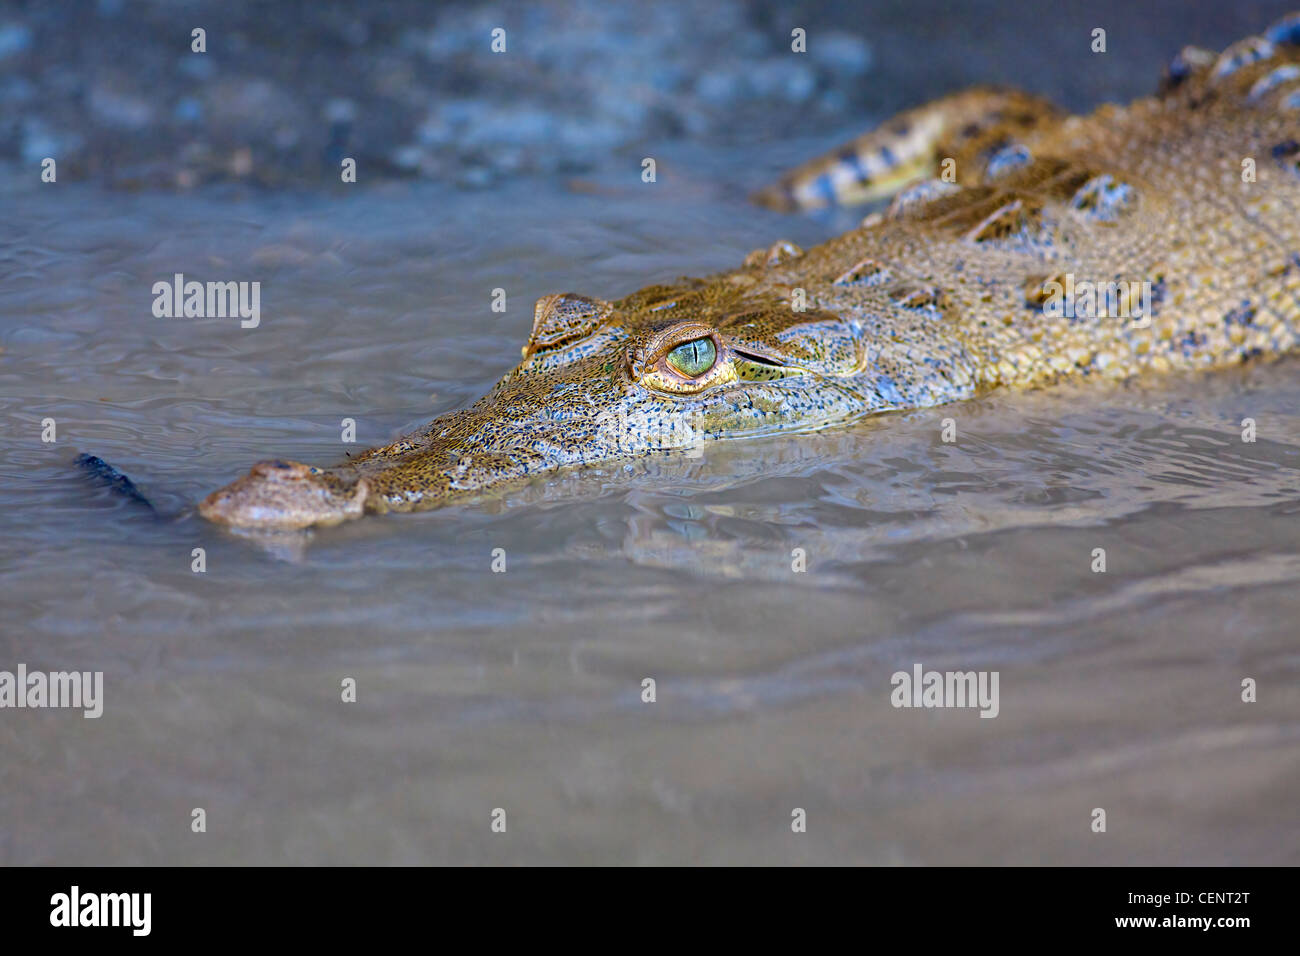 Baby Crocodile swimming in the water, Costa Rica Stock Photo